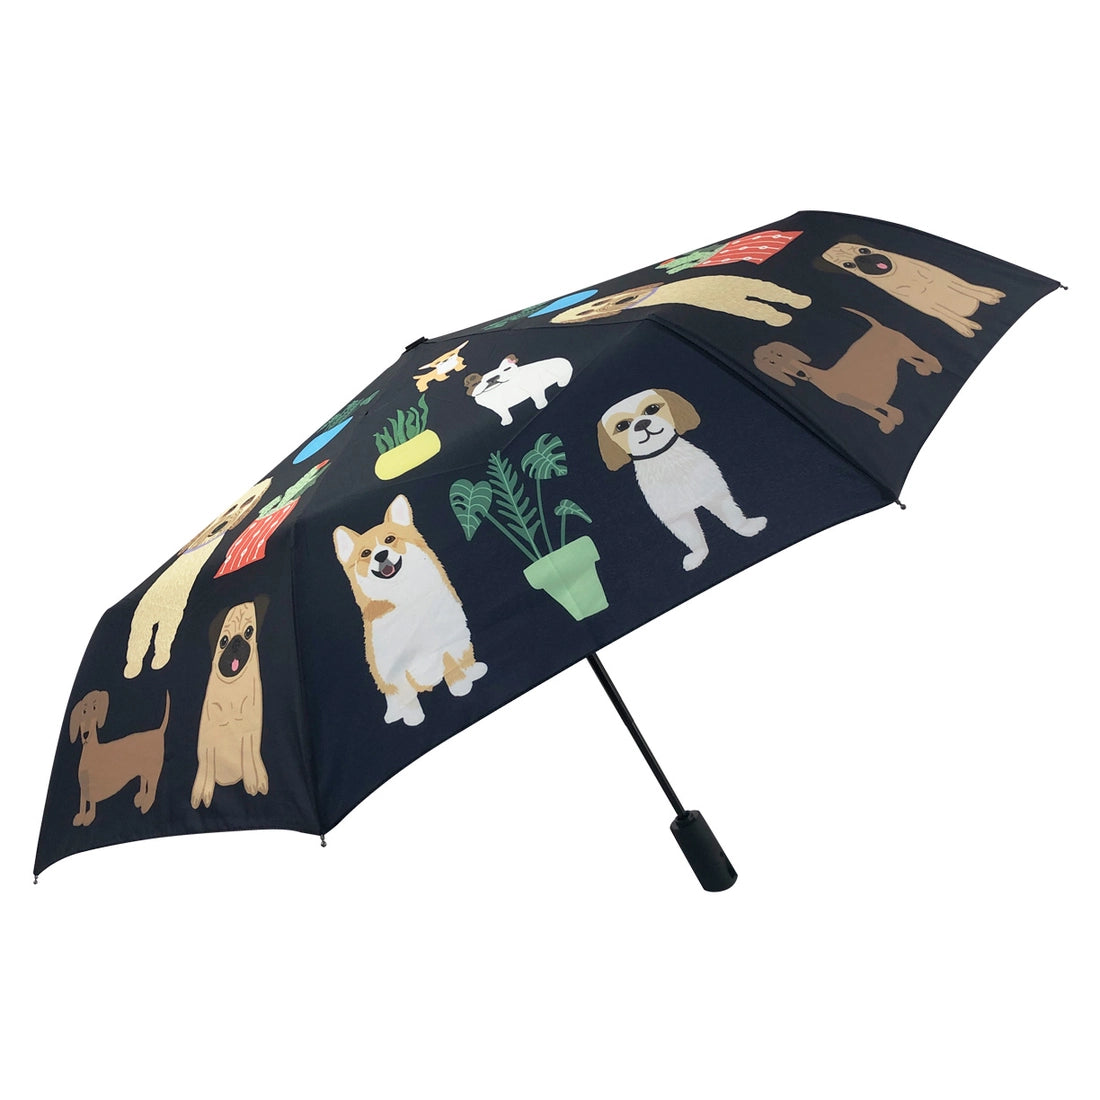 Cute animal umbrella dogs cats plants adorable chic rain umbrella stylish women's fashion gift for her